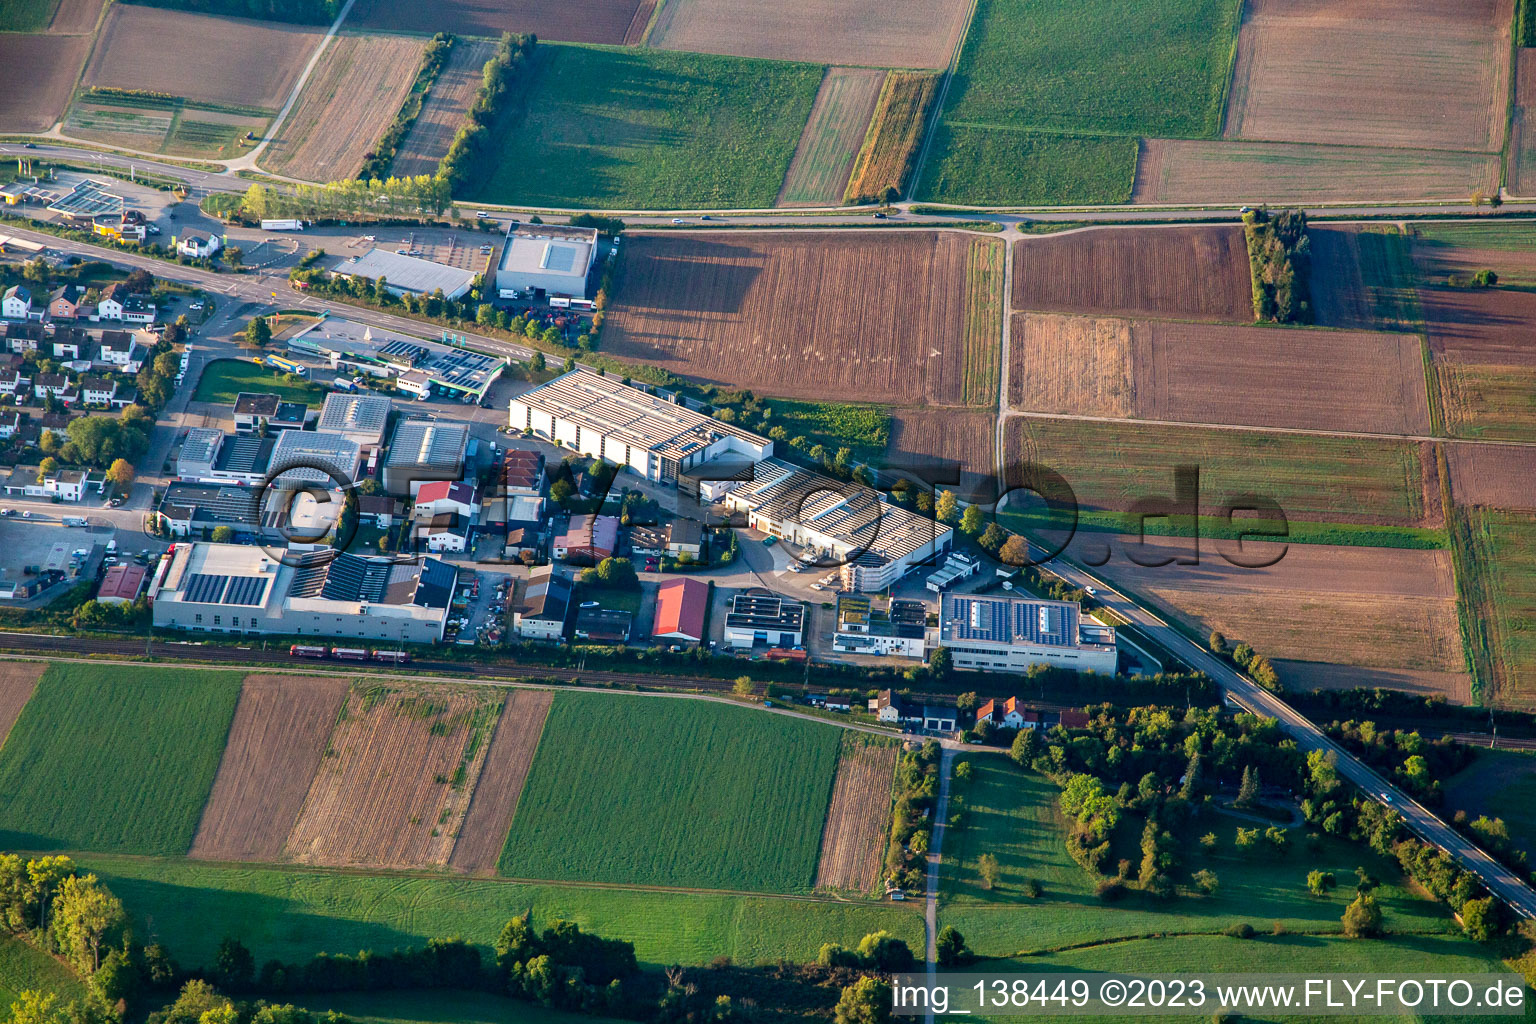 Winkel GmbH in the Am Illinger Eck industrial area in Illingen in the state Baden-Wuerttemberg, Germany